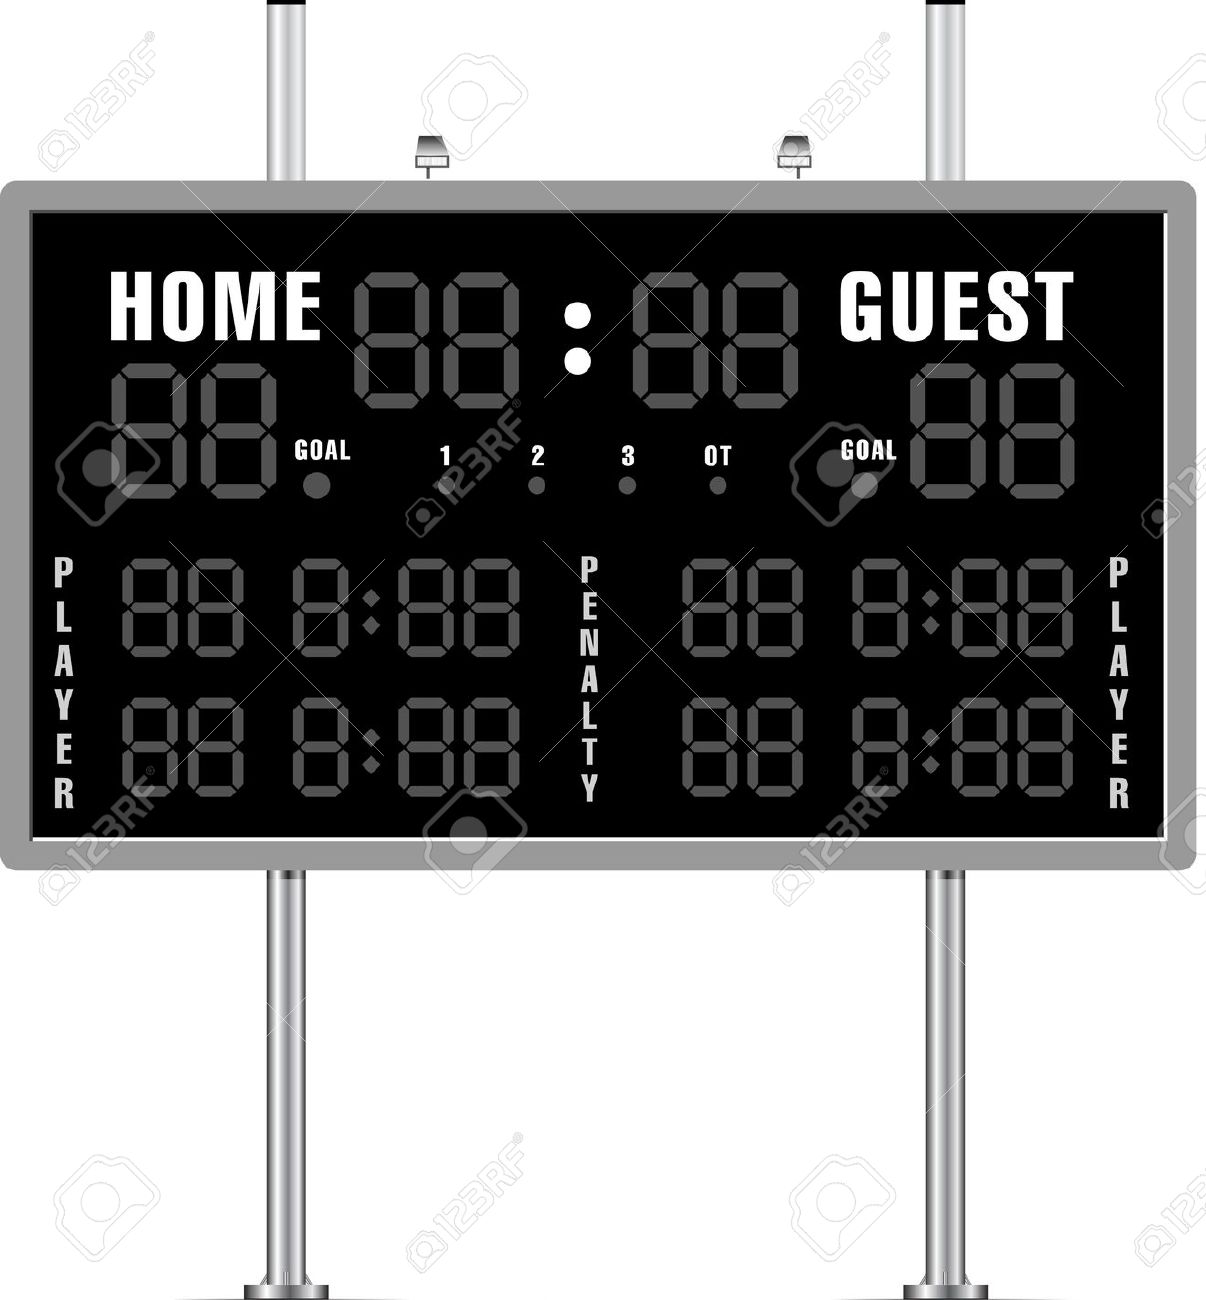 Home and Guest Scoreboard . - Scoreboard Clipart